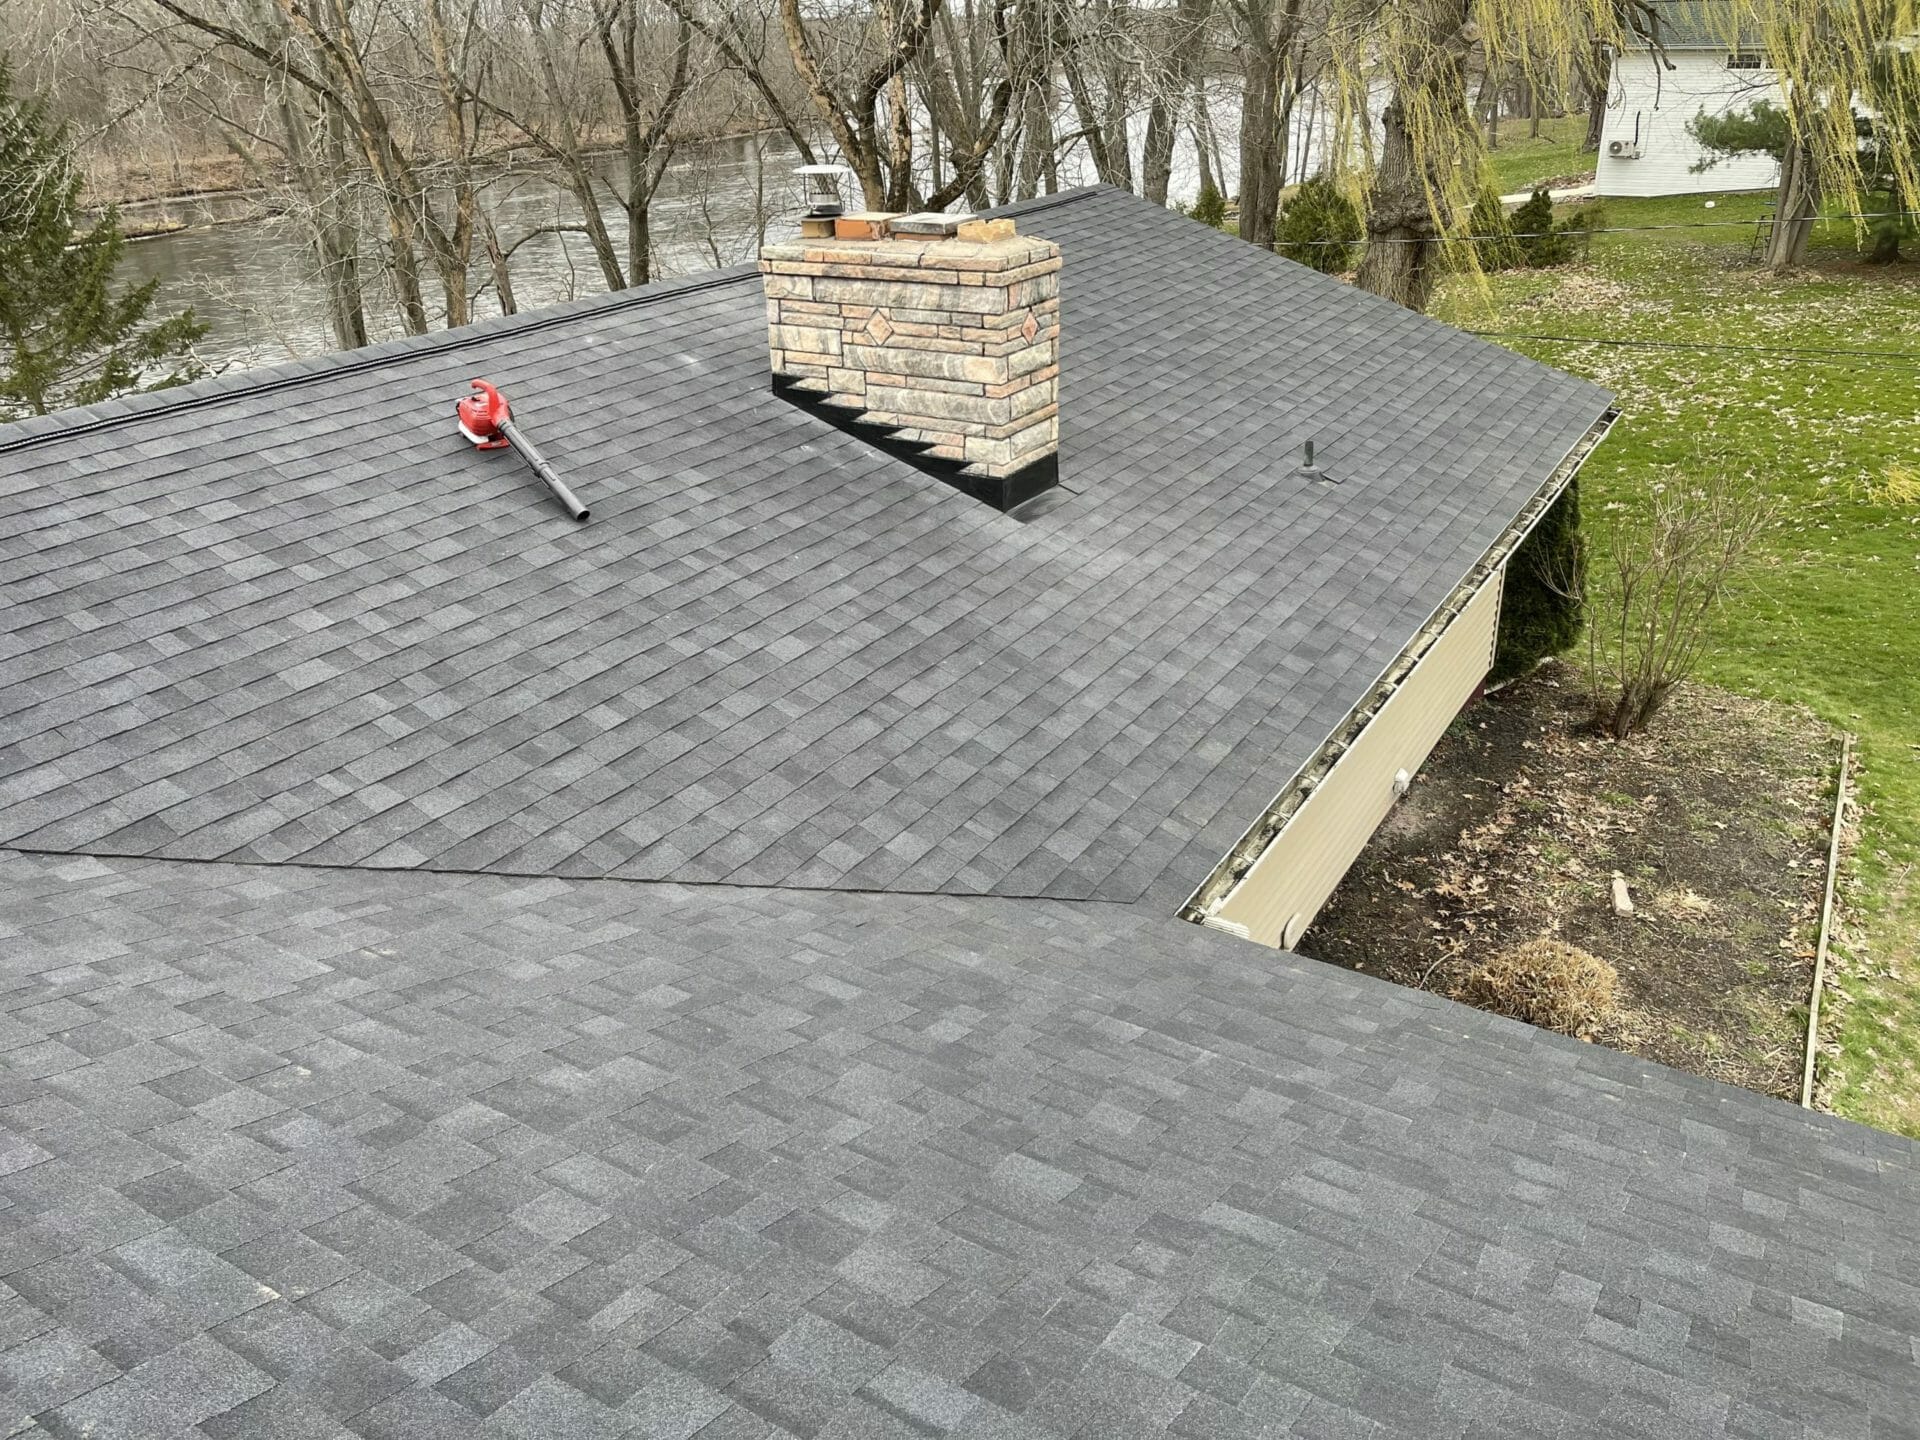 New asphalt shingle roof